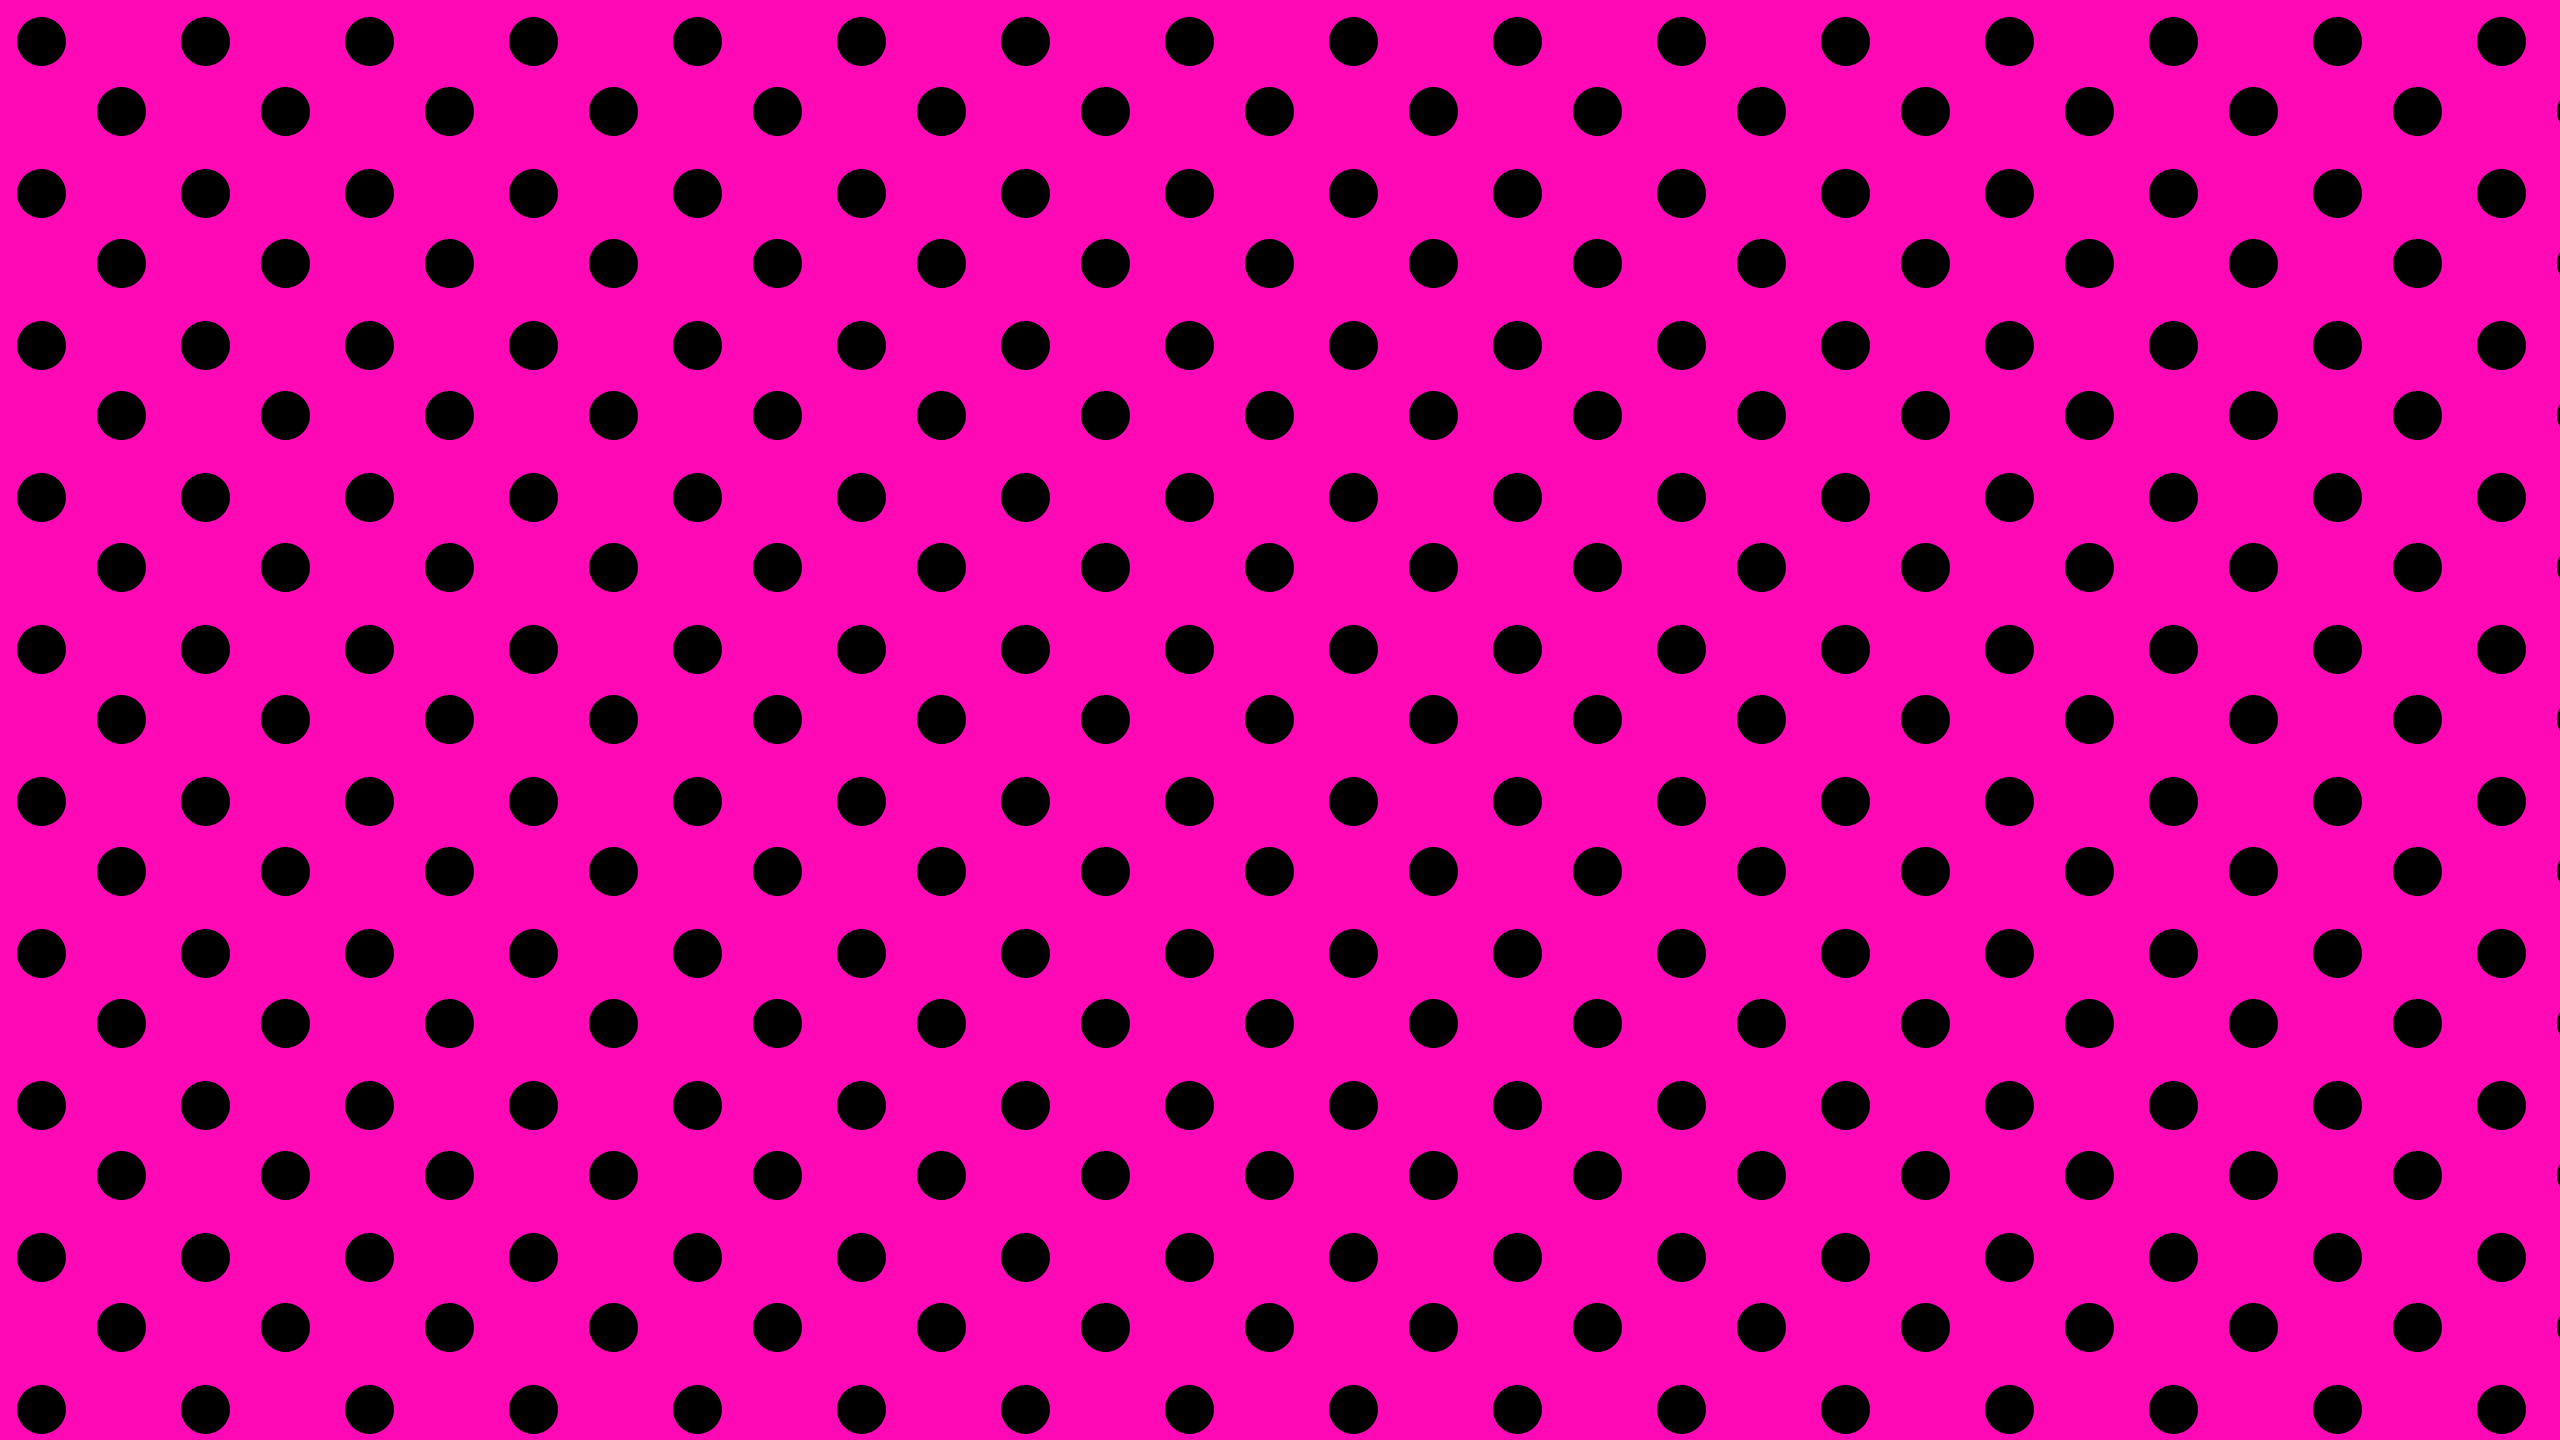 Polkadot Pink Desktop Background Wallpaper HD. Dots wallpaper, Pink and black wallpaper, Pink dots